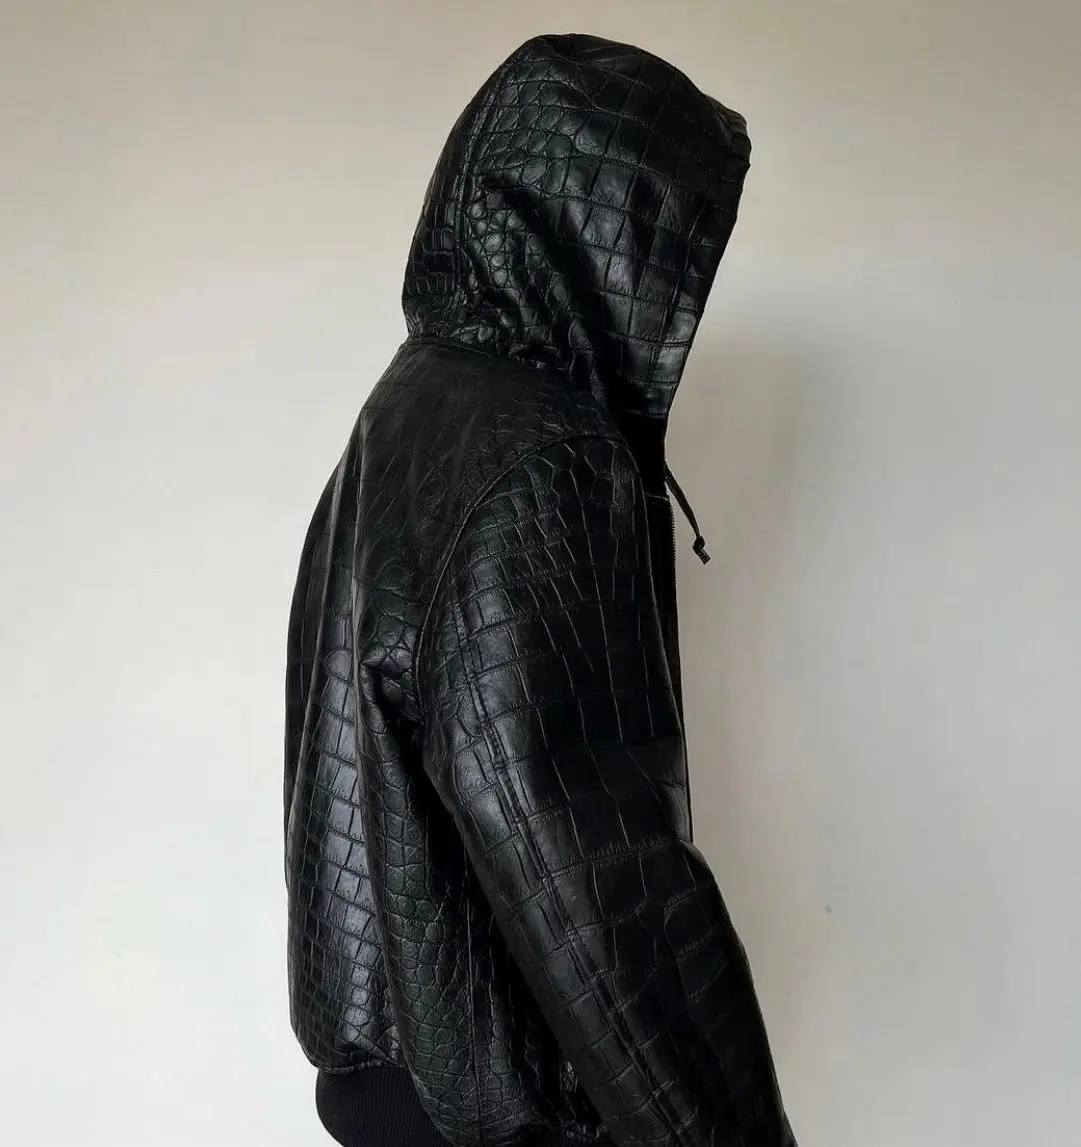 100% Real Crocodile/Alligator Leather Jacket Made To Measure-Customize  Jacket